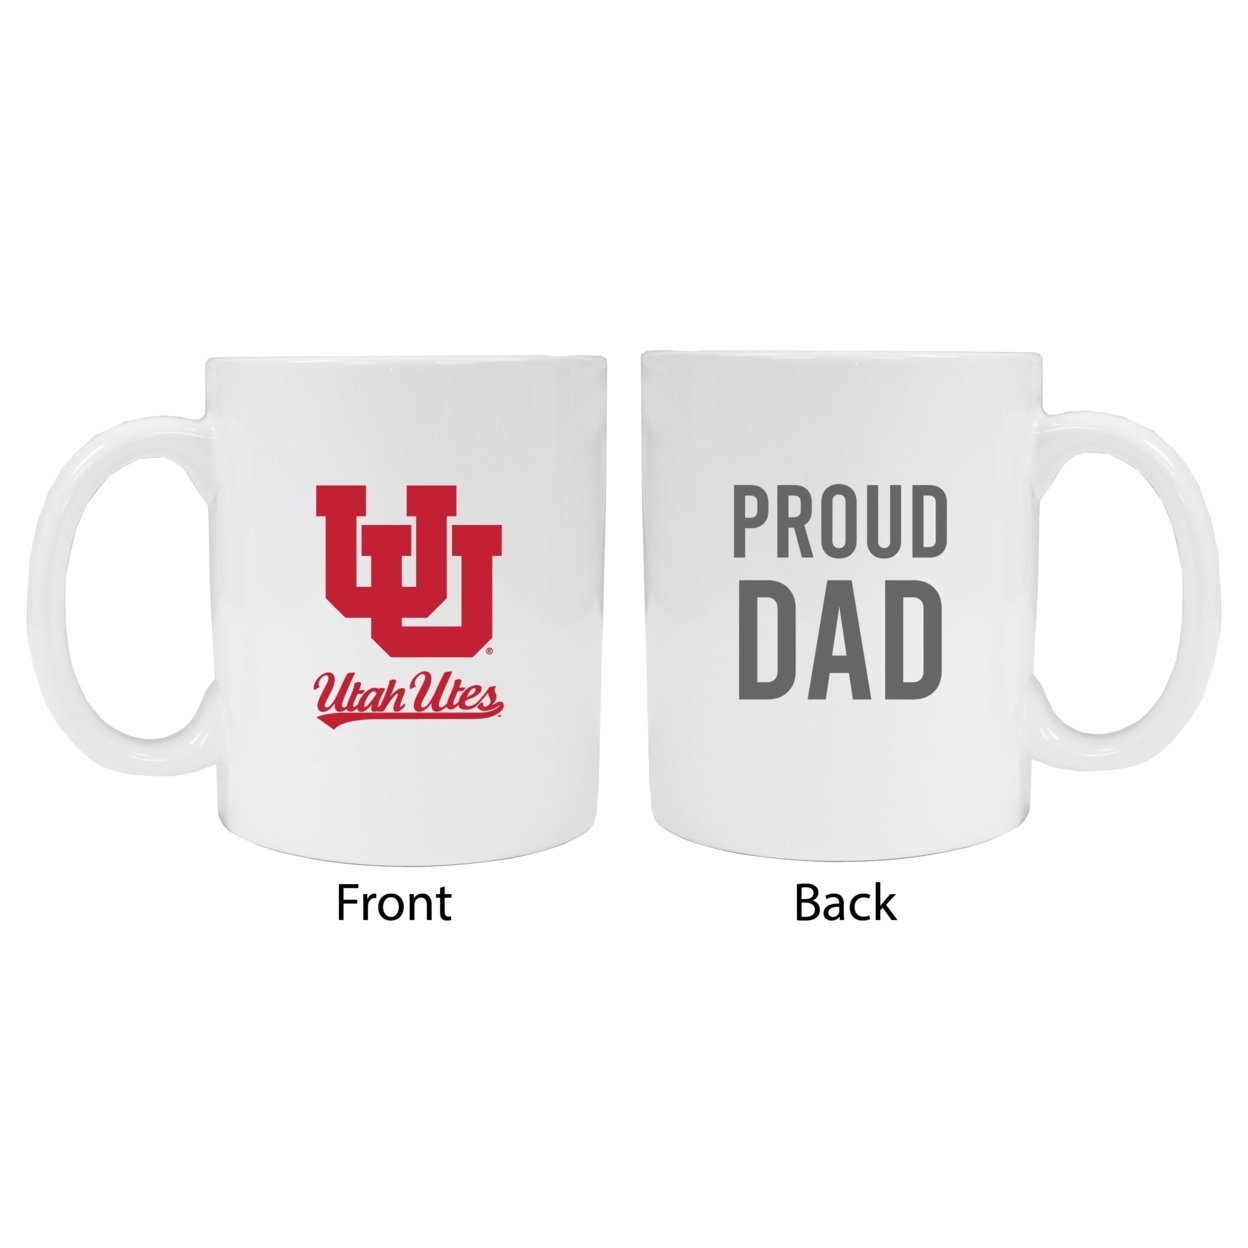 Utah Utes Proud Dad Ceramic Coffee Mug - White (2 Pack)